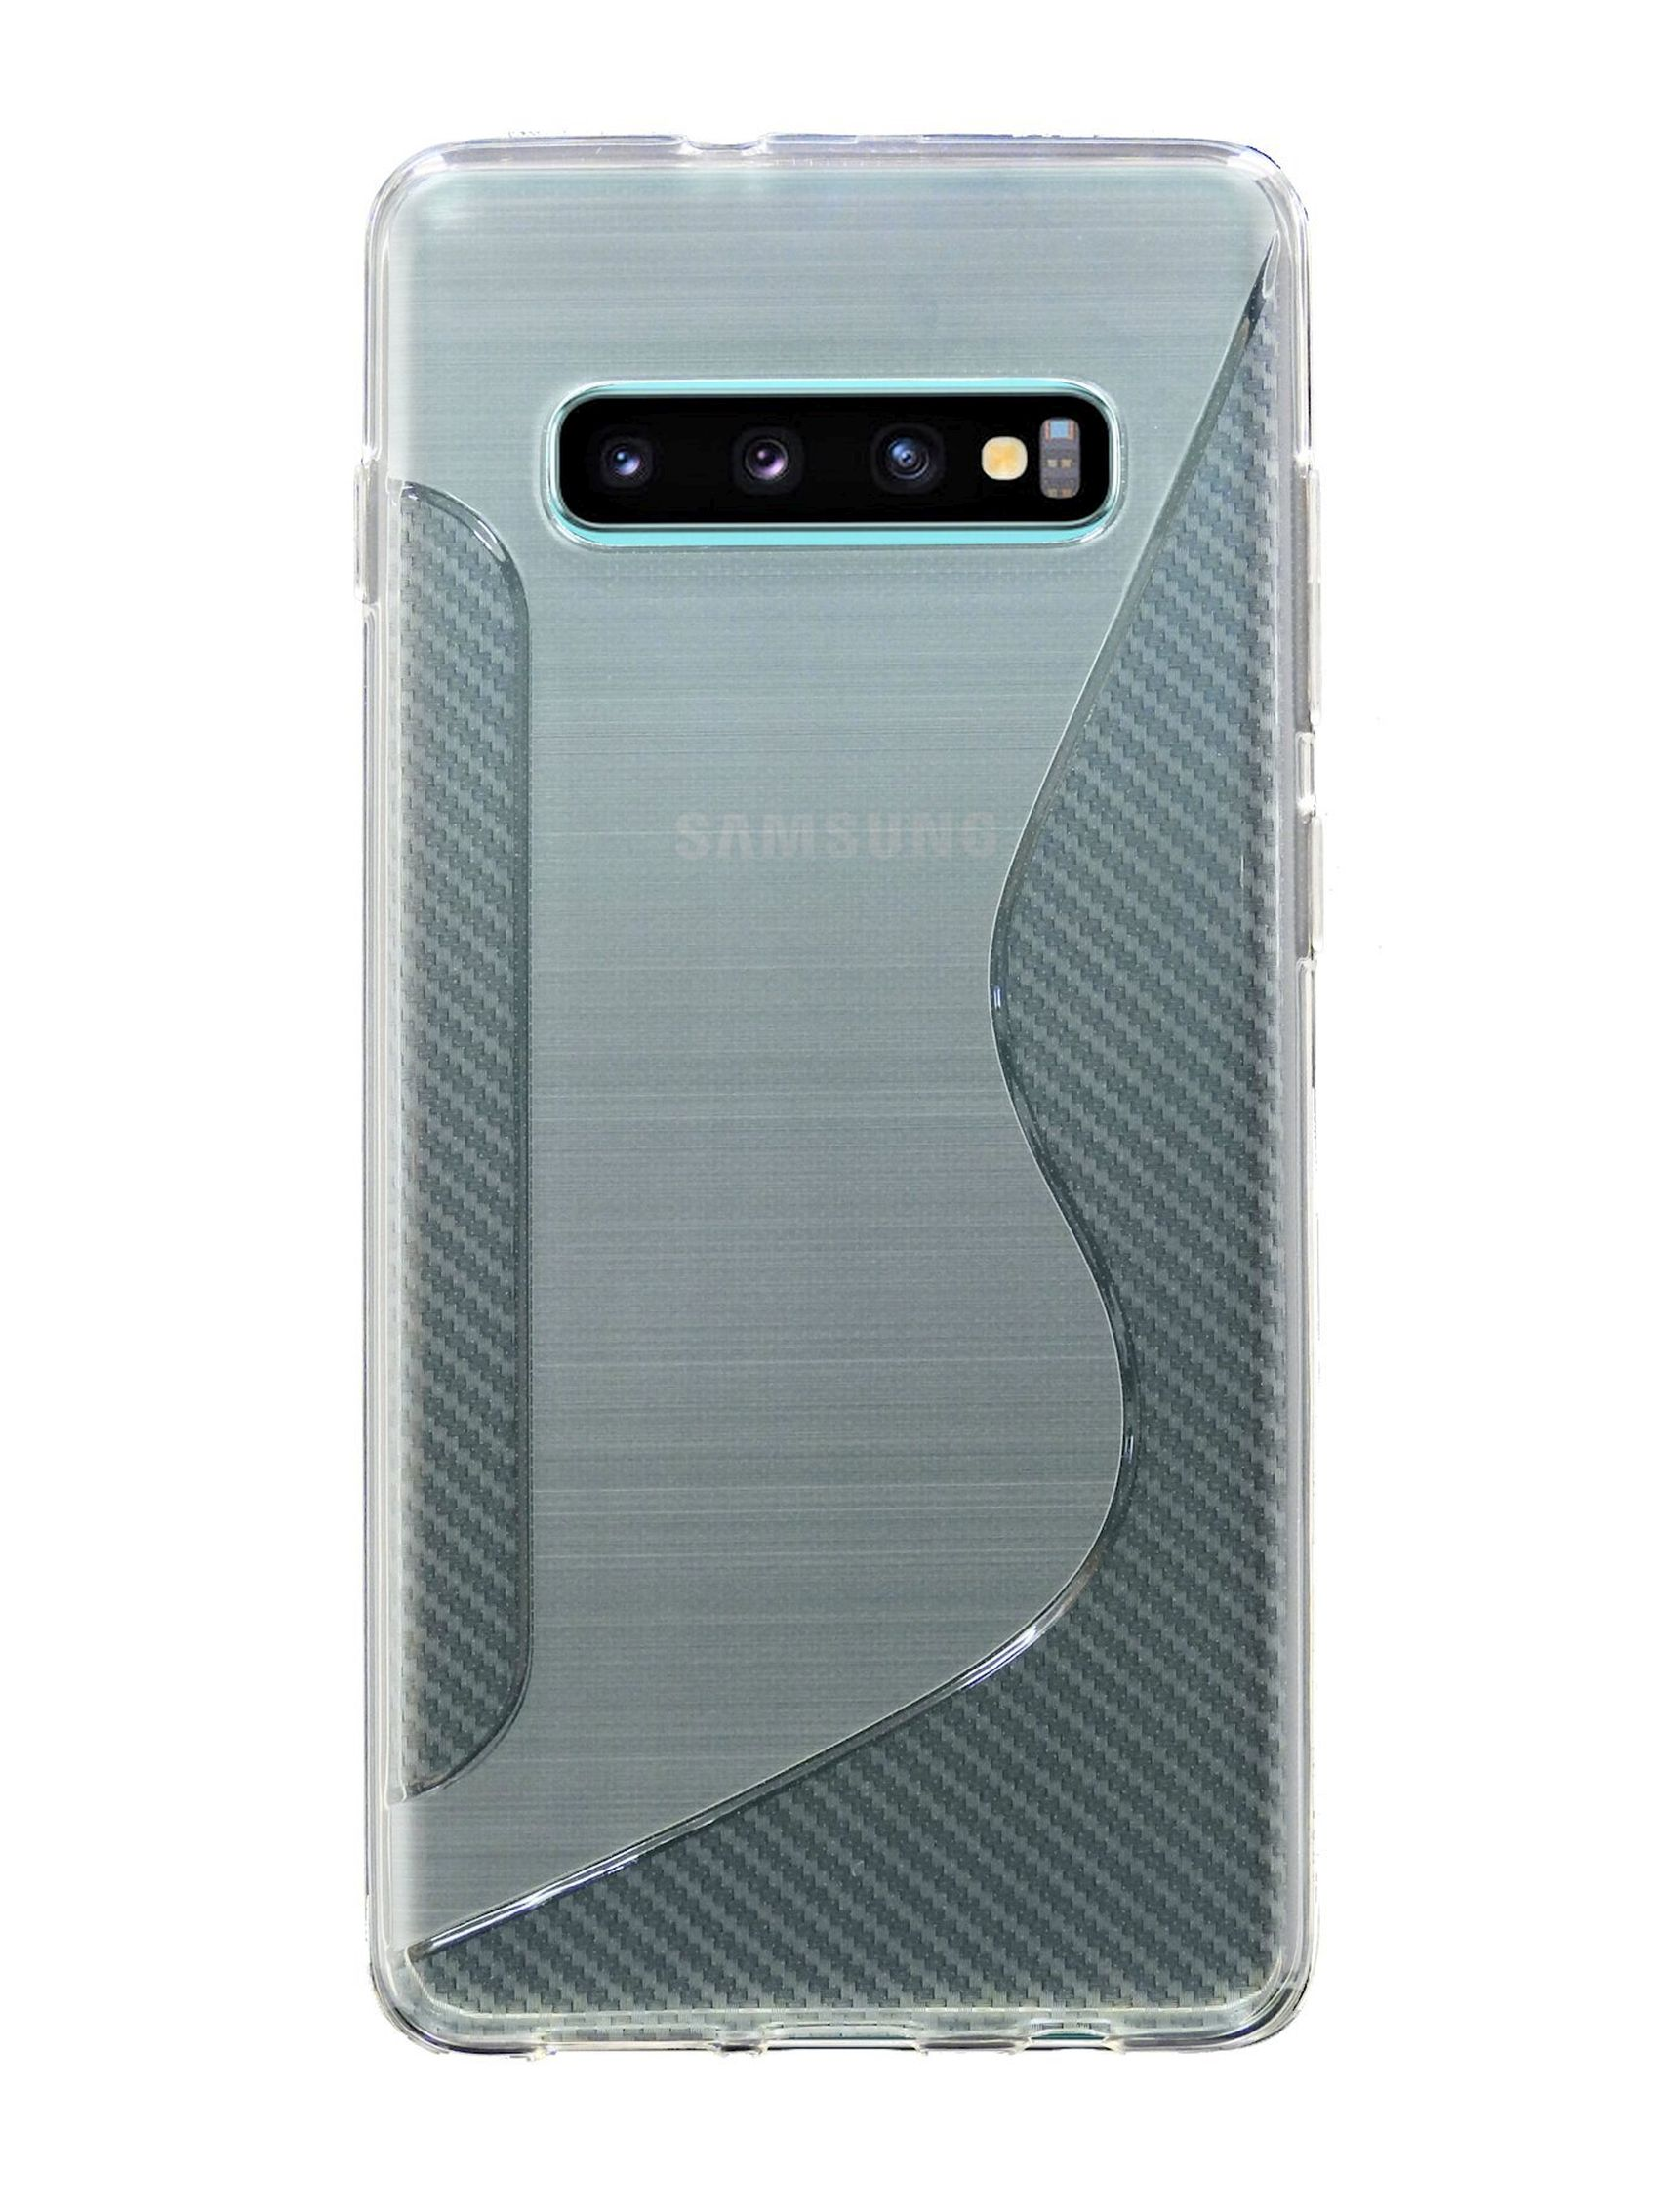 COFI S-Line Cover, Bumper, S10, Samsung, Transparent Galaxy